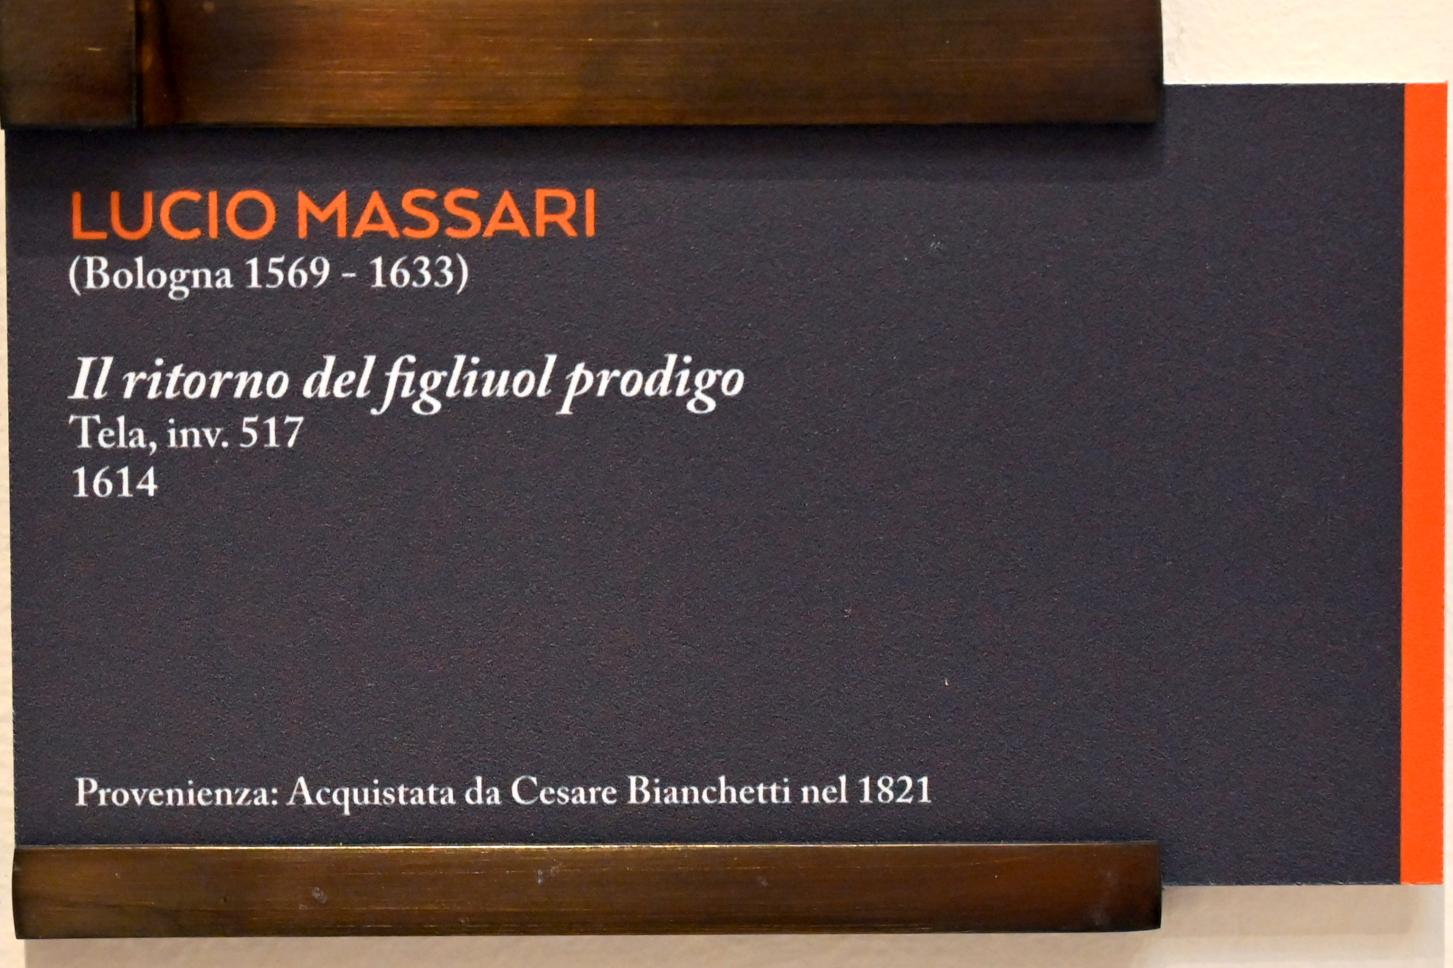 Lucio Massari (1614), Heimkehr des verlorenen Sohnes, Bologna, Pinacoteca Nazionale, Saal 25, 1614, Bild 2/2